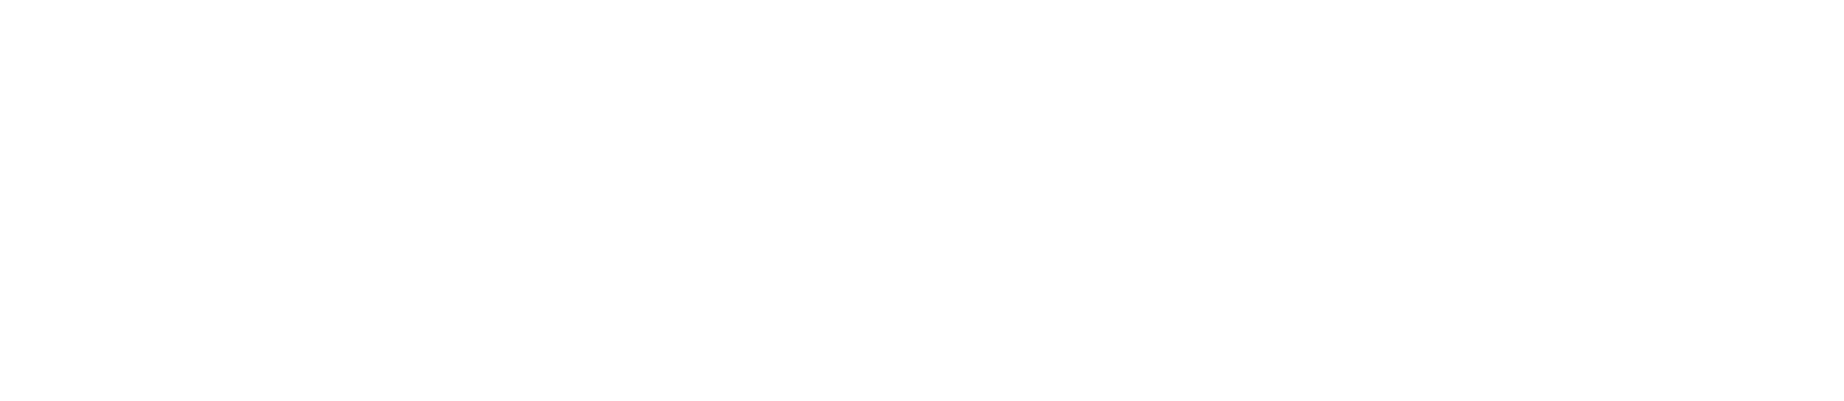 Veeva Commercial Summit - Sales, Marketing, Medical